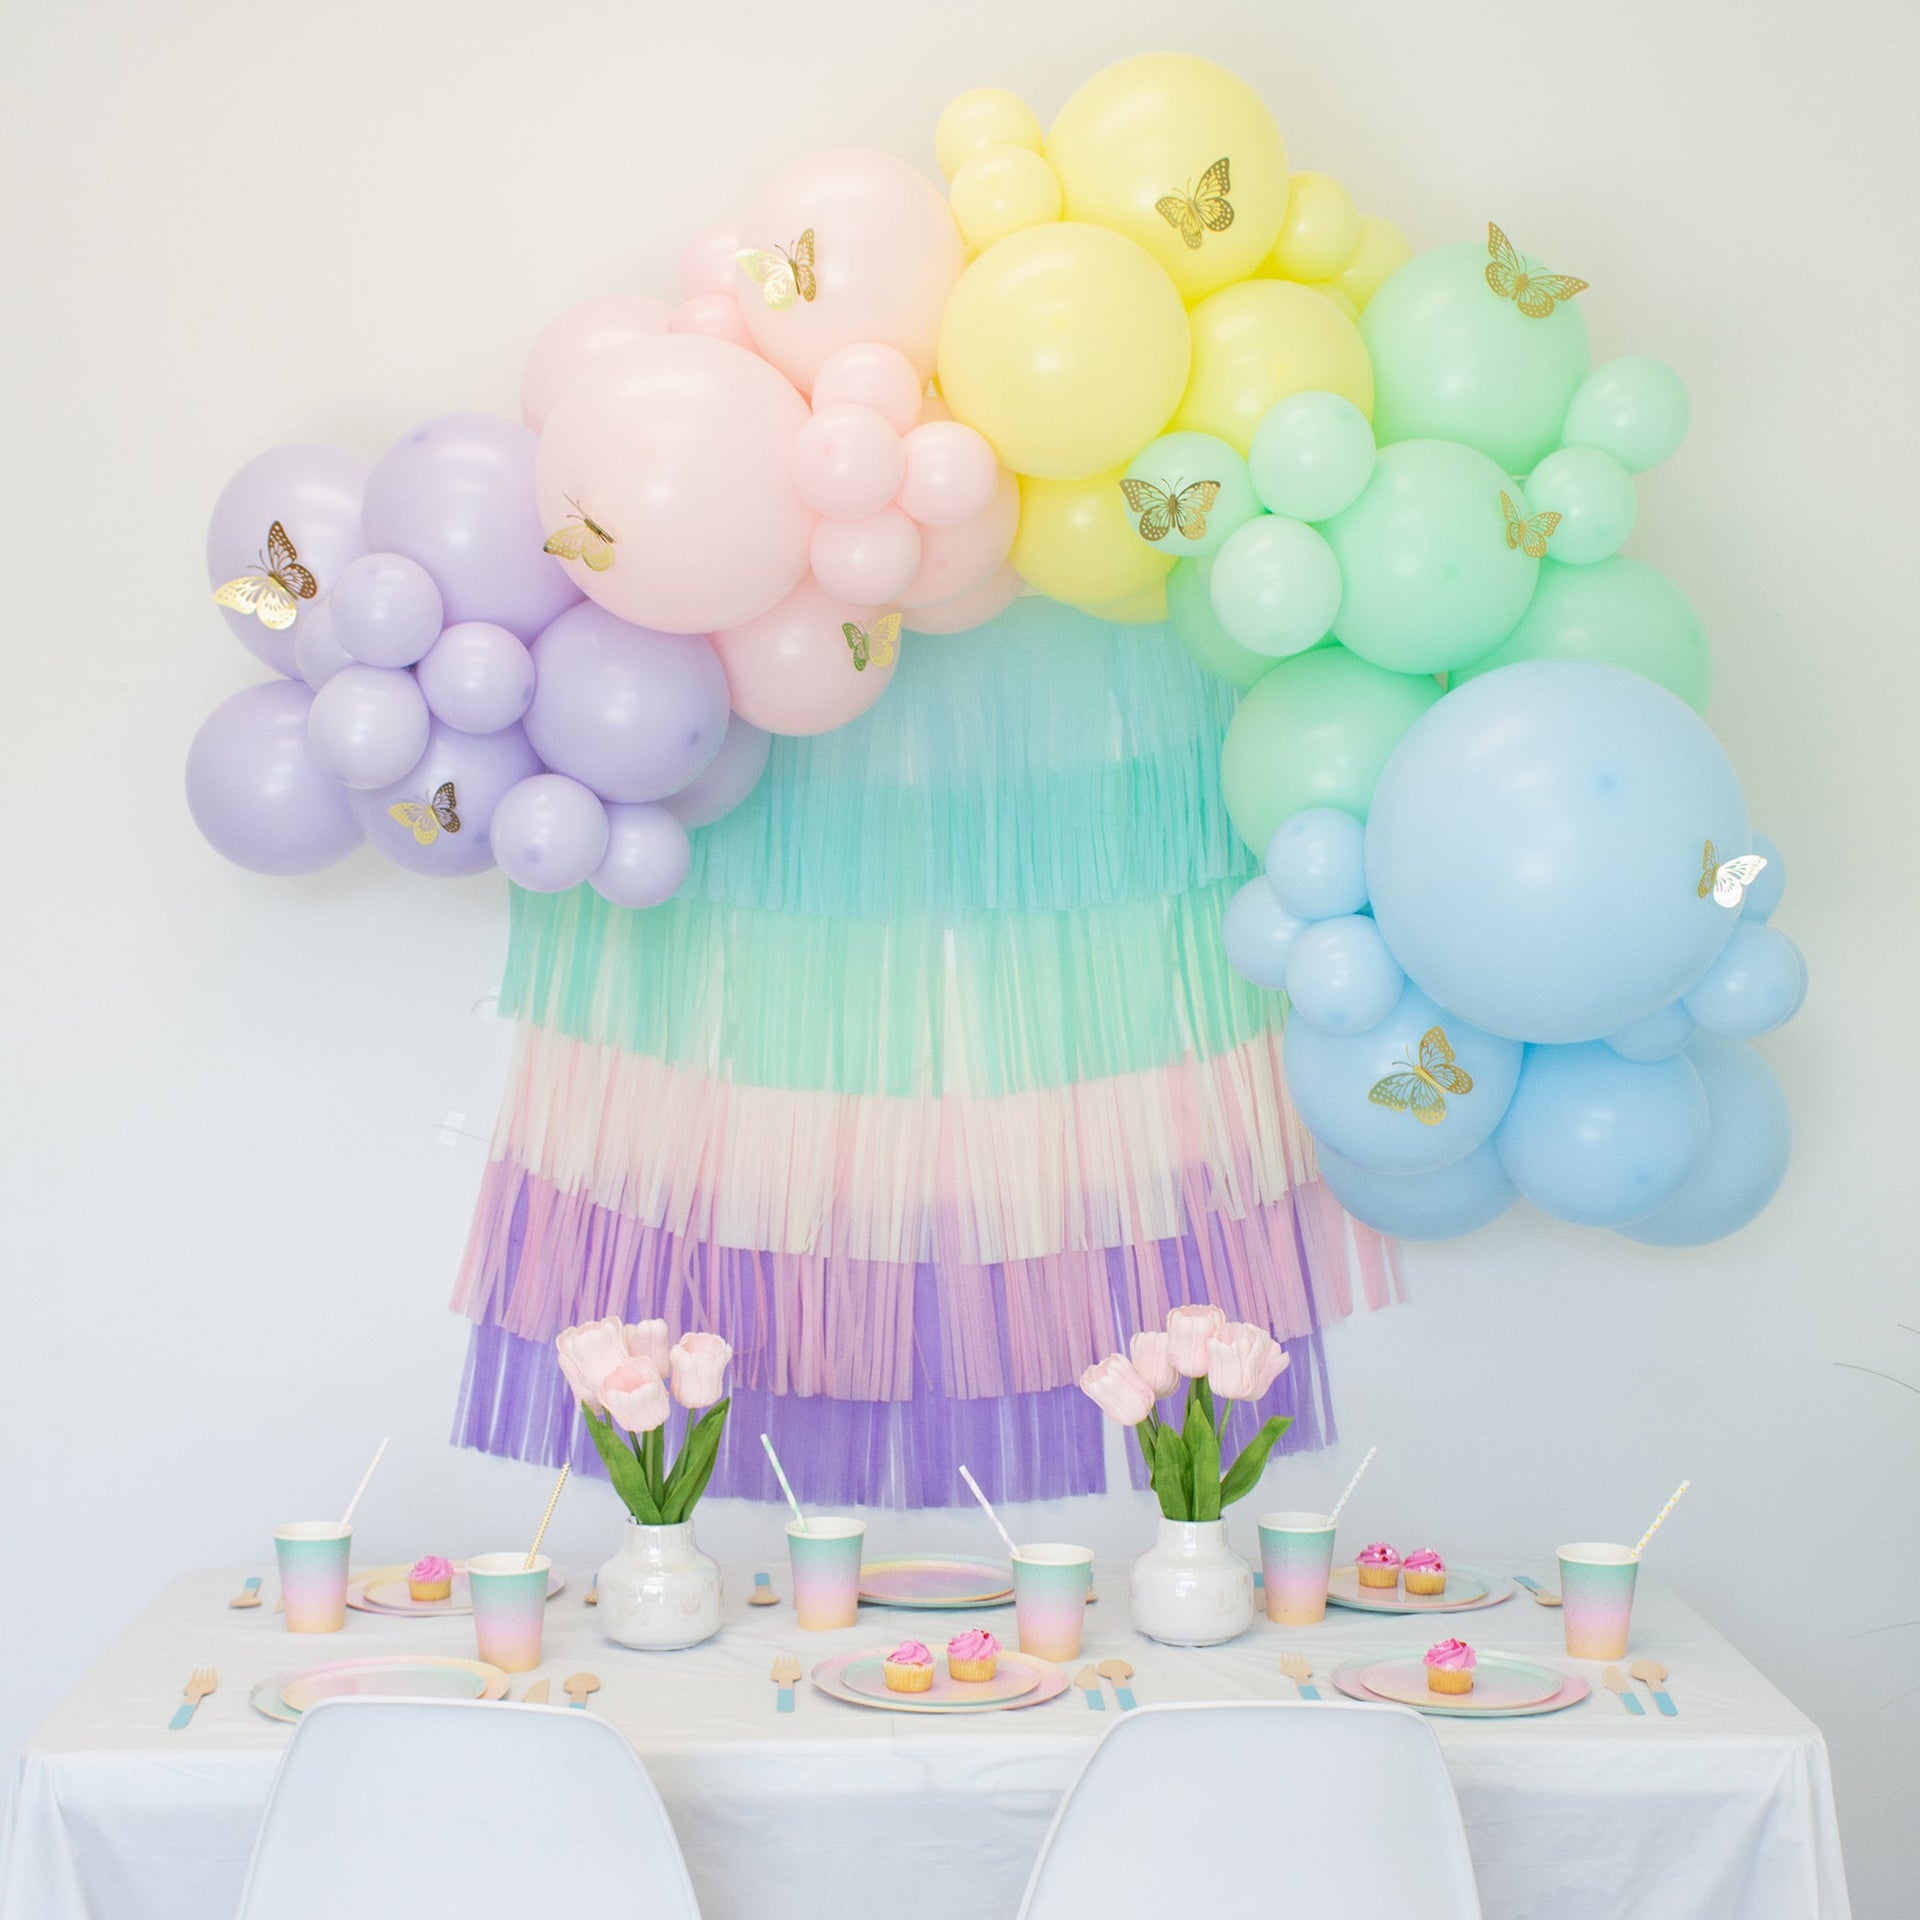 Pastel Rainbow Birthday Decorations  Pastel Rainbow Party Decorations -  151pcs - Aliexpress